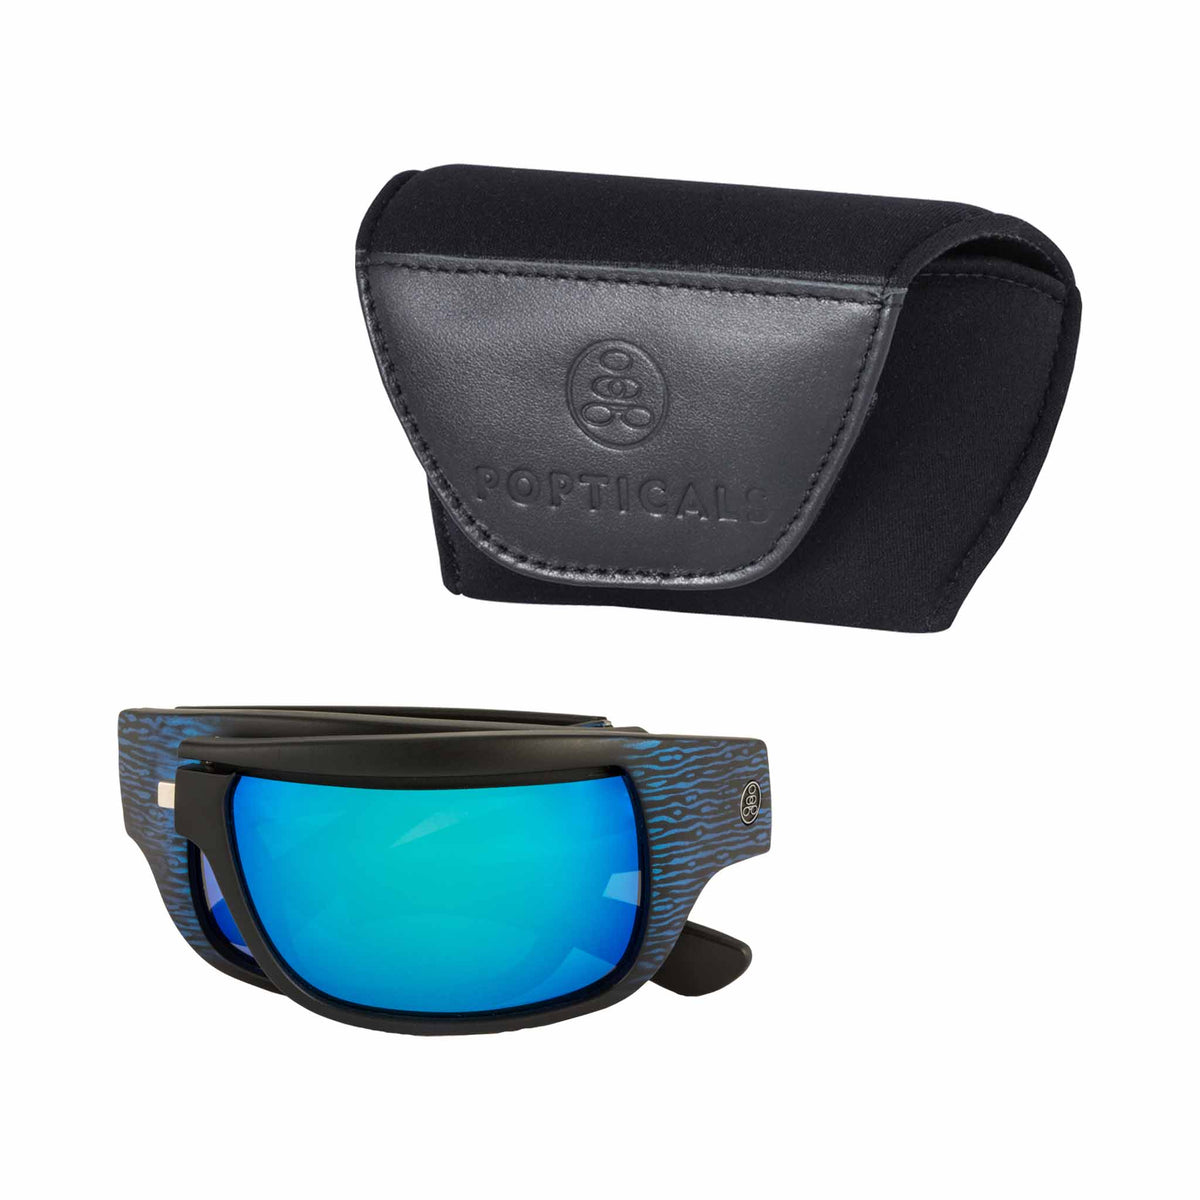 Popticals, Premium Compact Sunglasses, PopH2O, 010070-EUUN, Polarized Sunglasses, Matte Blue/Black Wood Frame, Gray Lenses w/Blue Mirror Finish, Case View